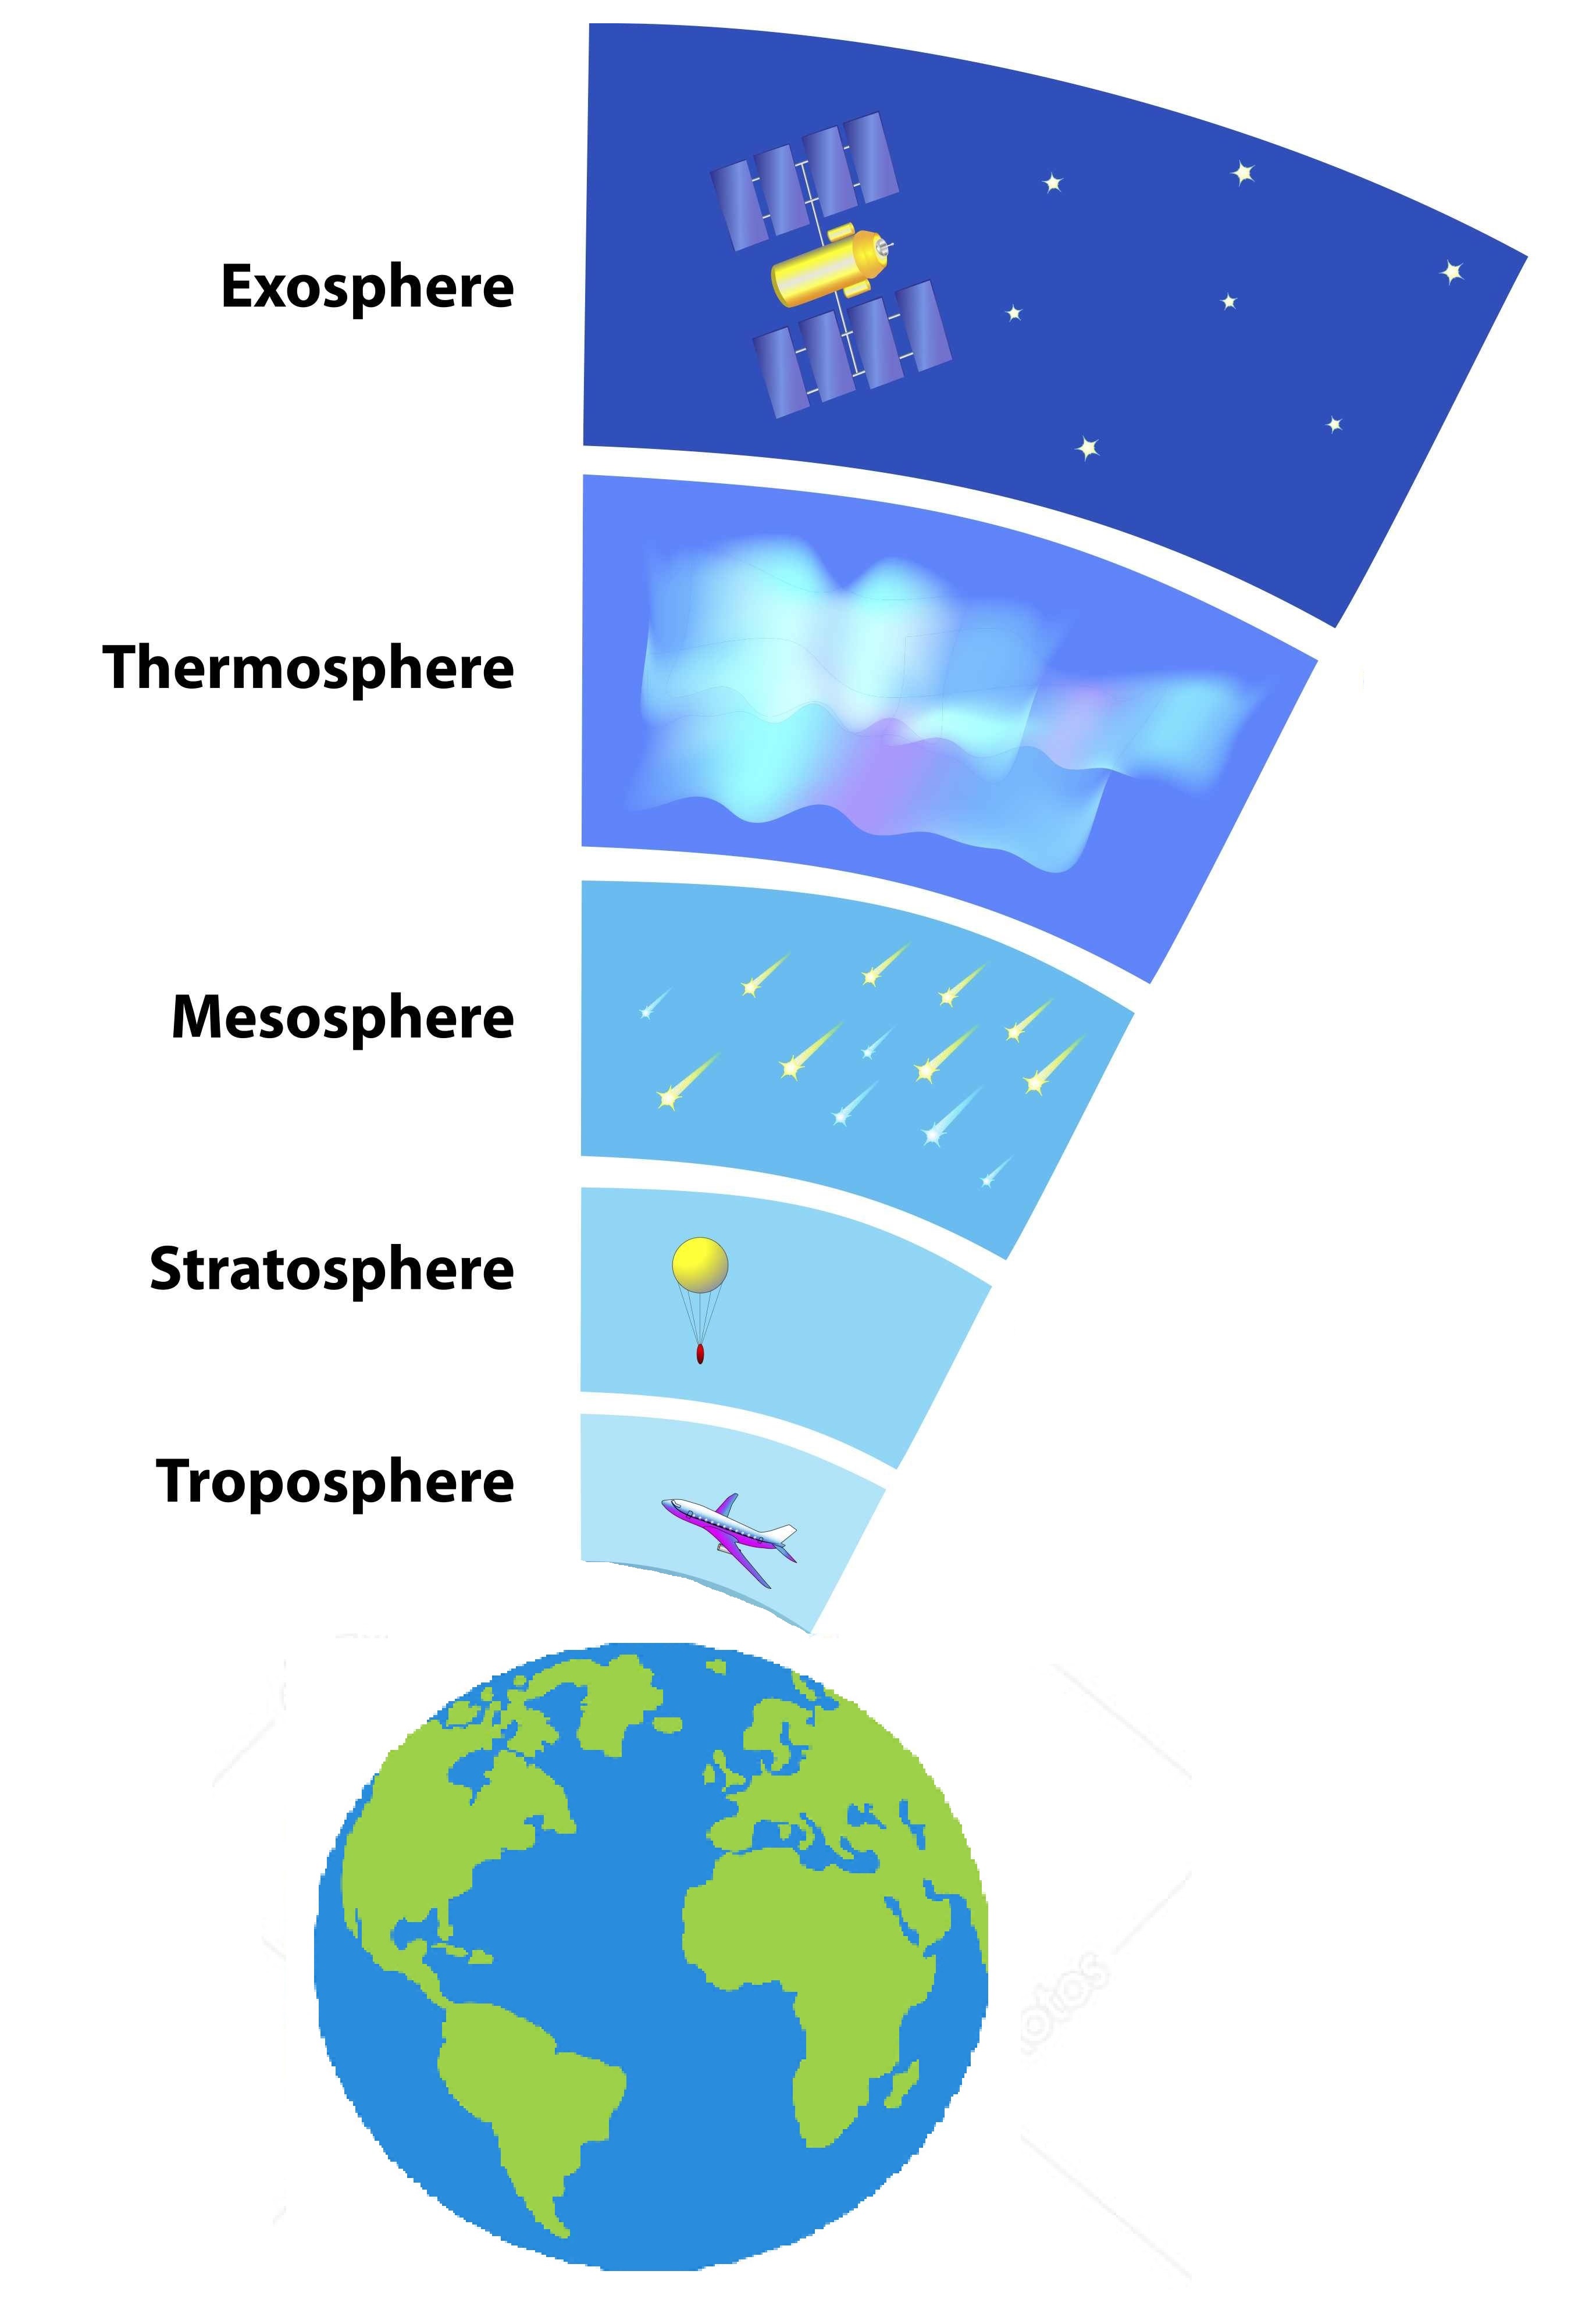 https://www.wisdommaterials.com/download/Enjoy/InterestingTopics/EarthsatmosphereLayers.jpg